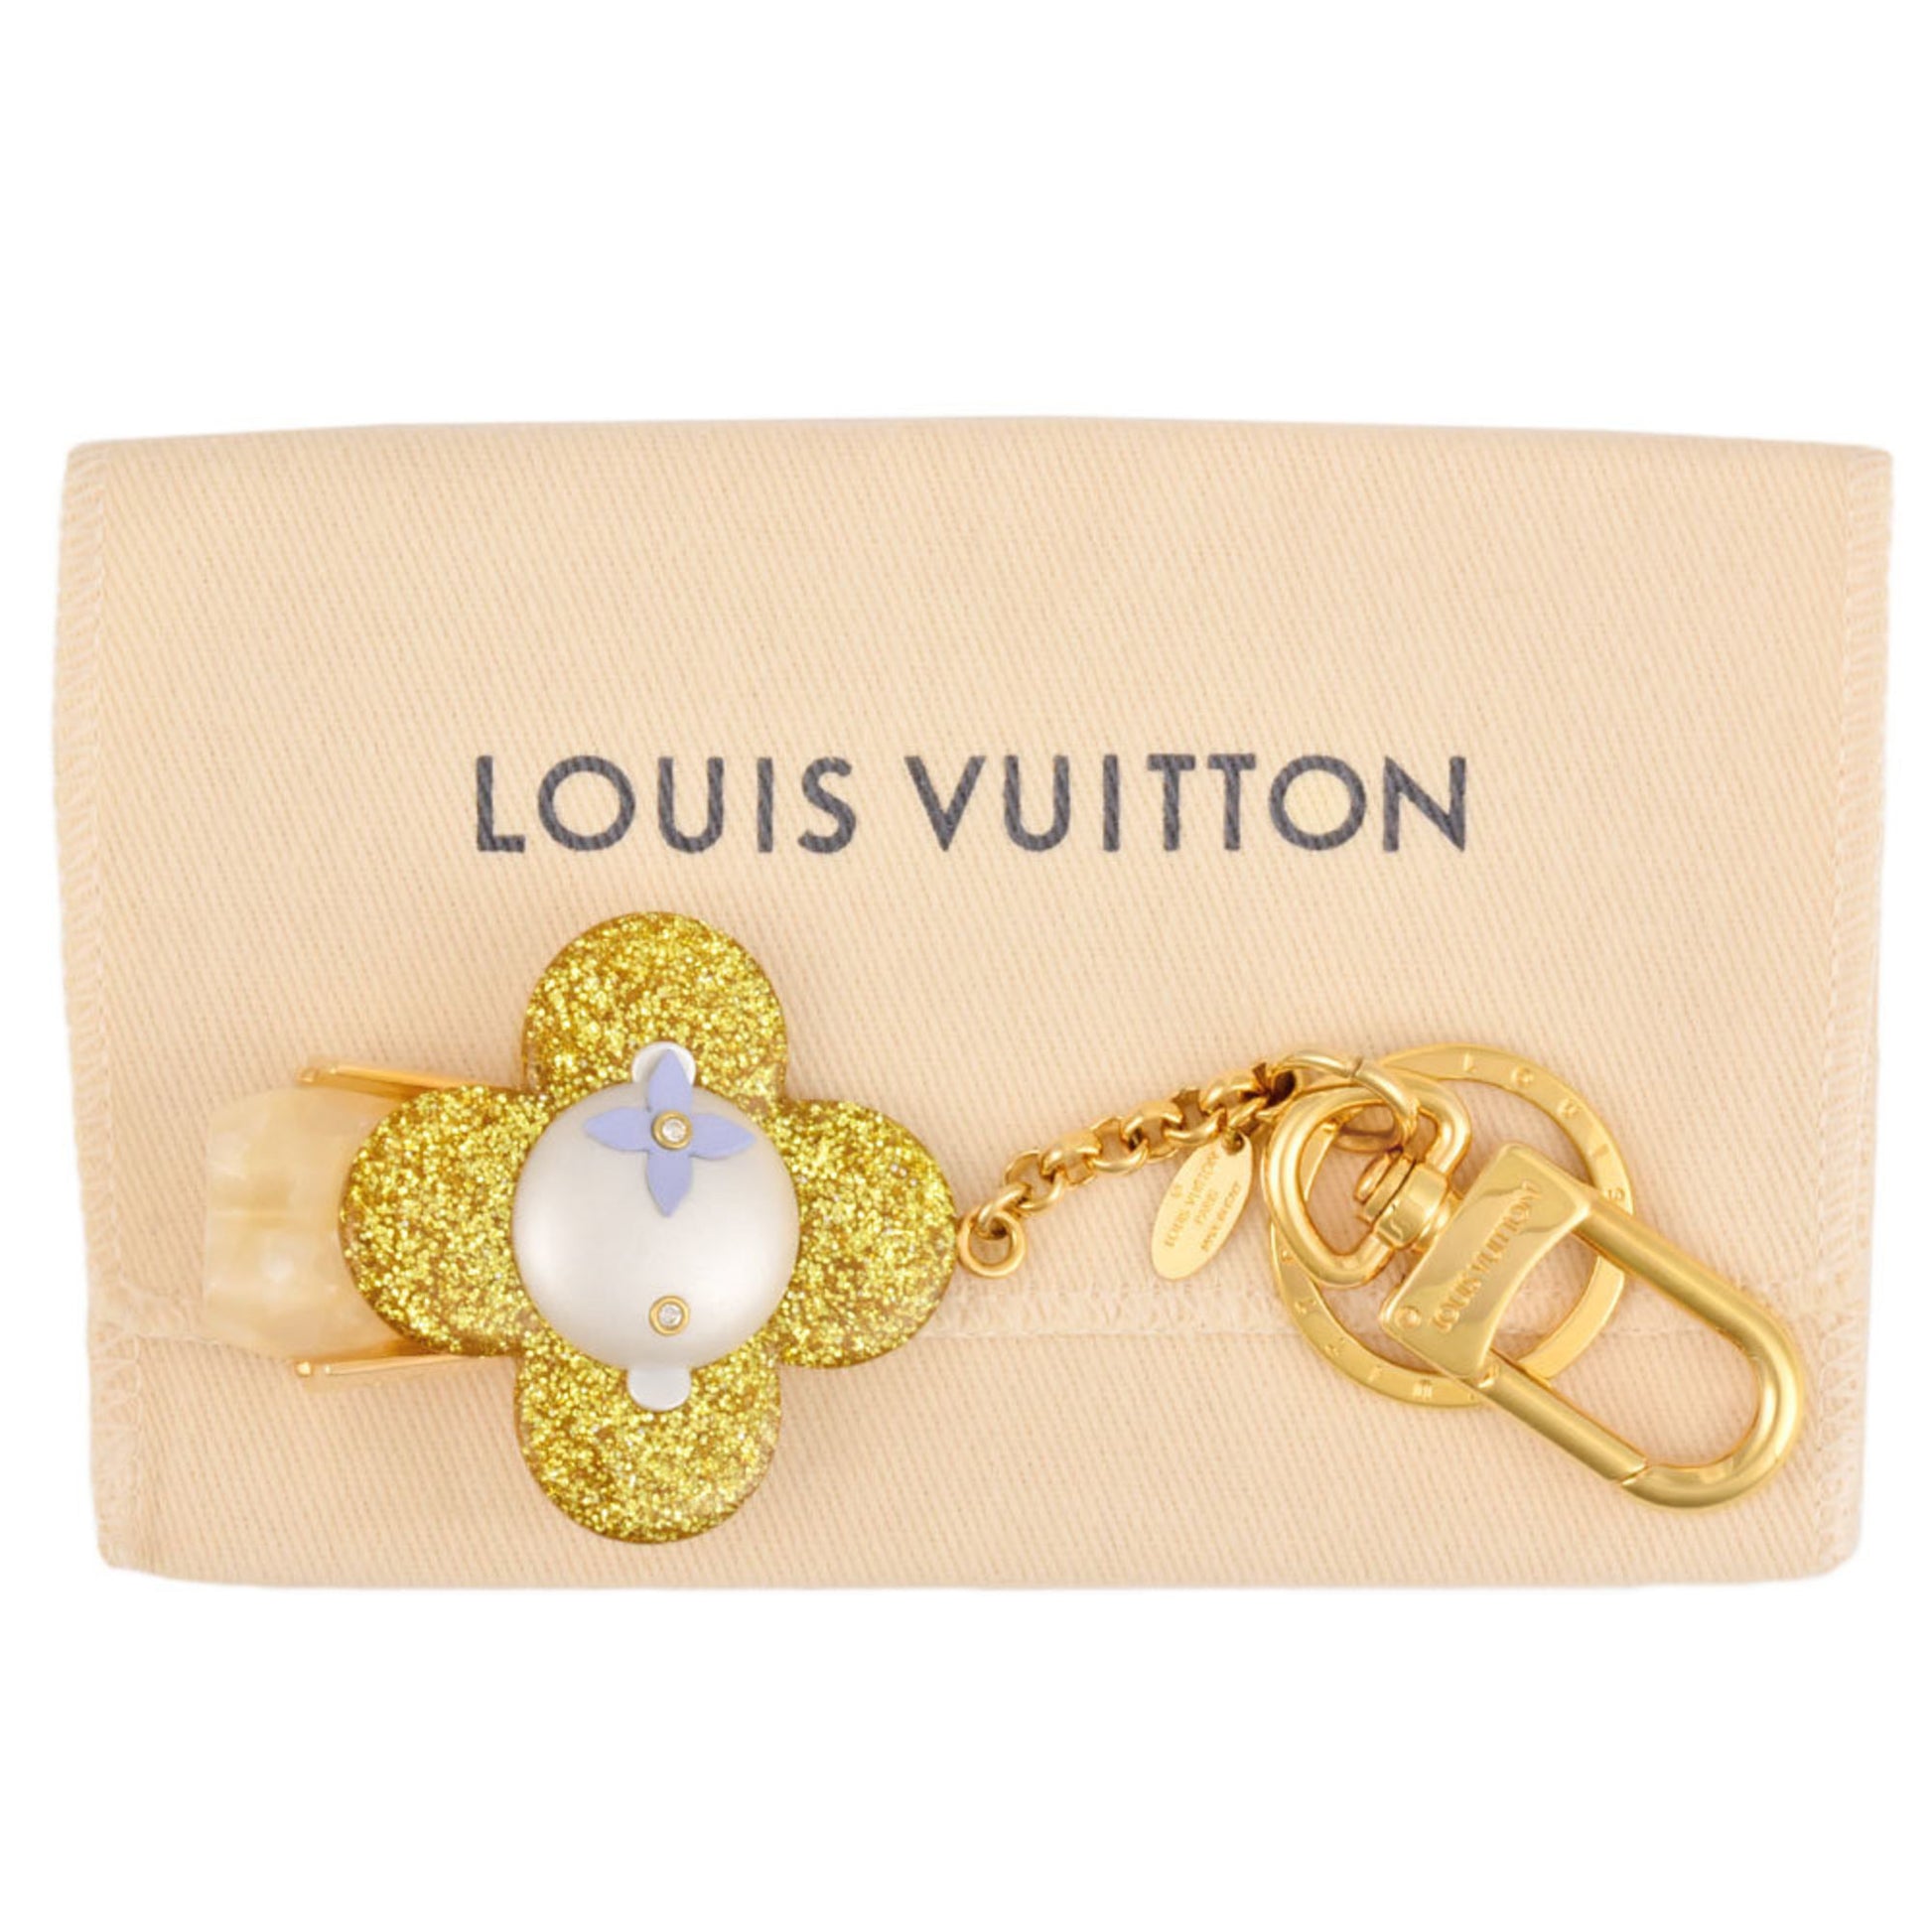 LOUIS VUITTON Strap Key ring holder chain Bag charm AUTH Porto Cle marina  M66141